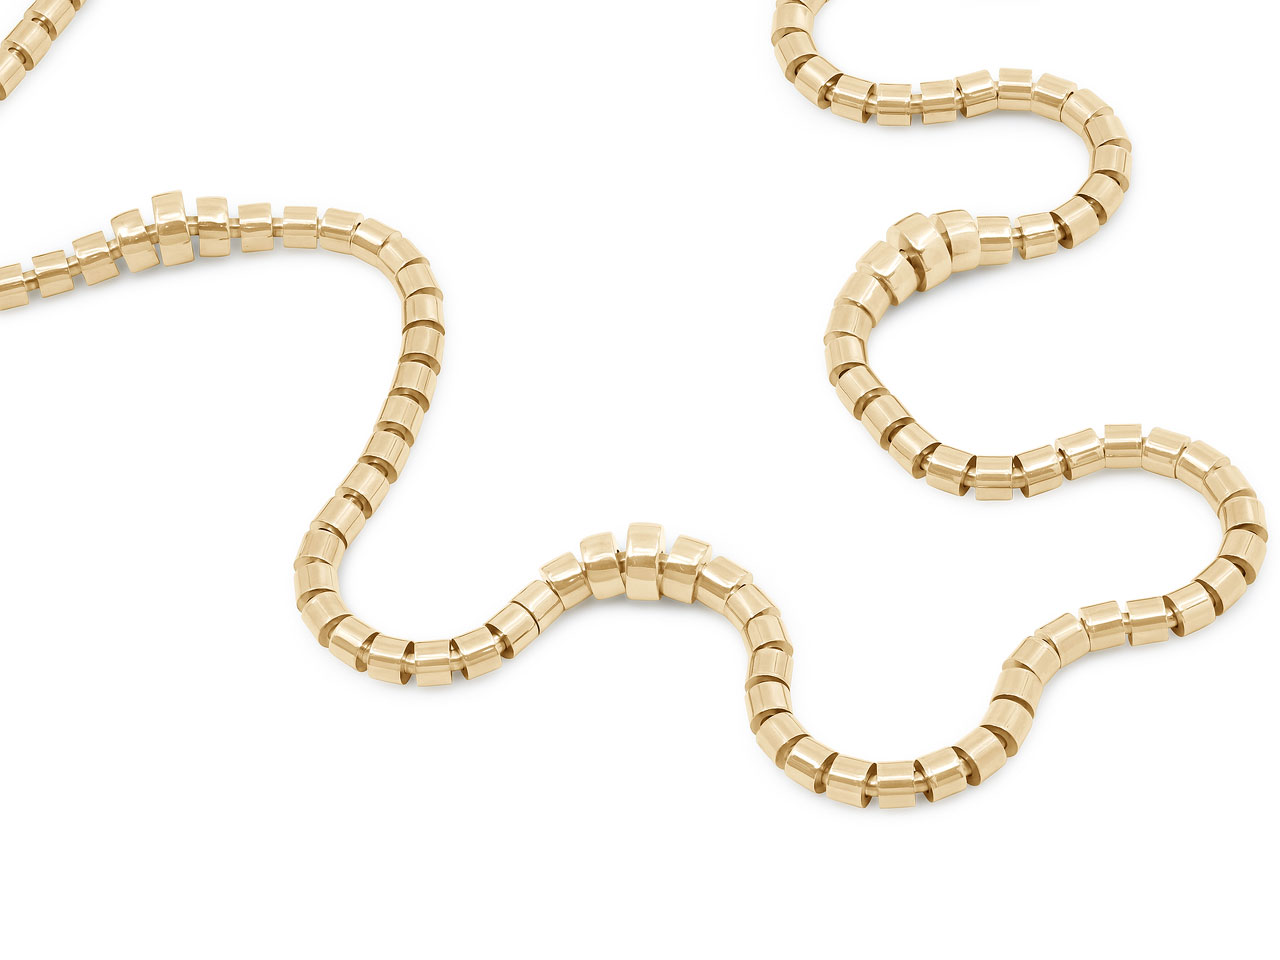 Italian Skinny Flexible Tube Necklace in 18K Gold, by Beladora